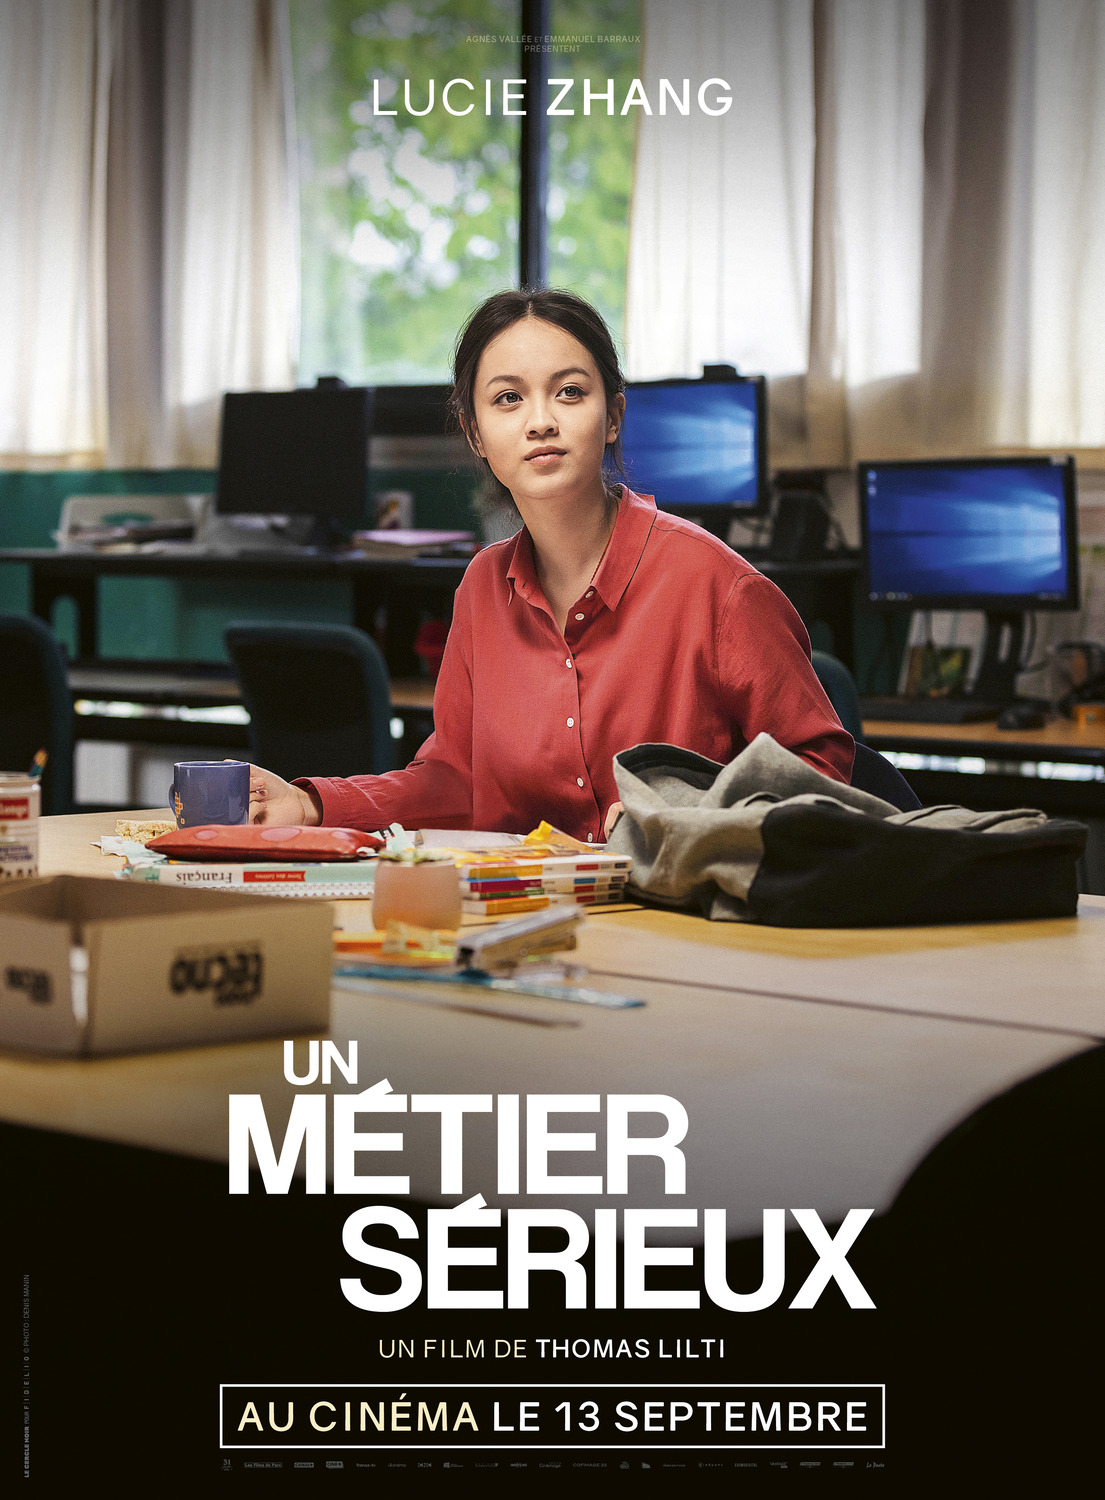 Extra Large Movie Poster Image for Un métier sérieux (#7 of 7)